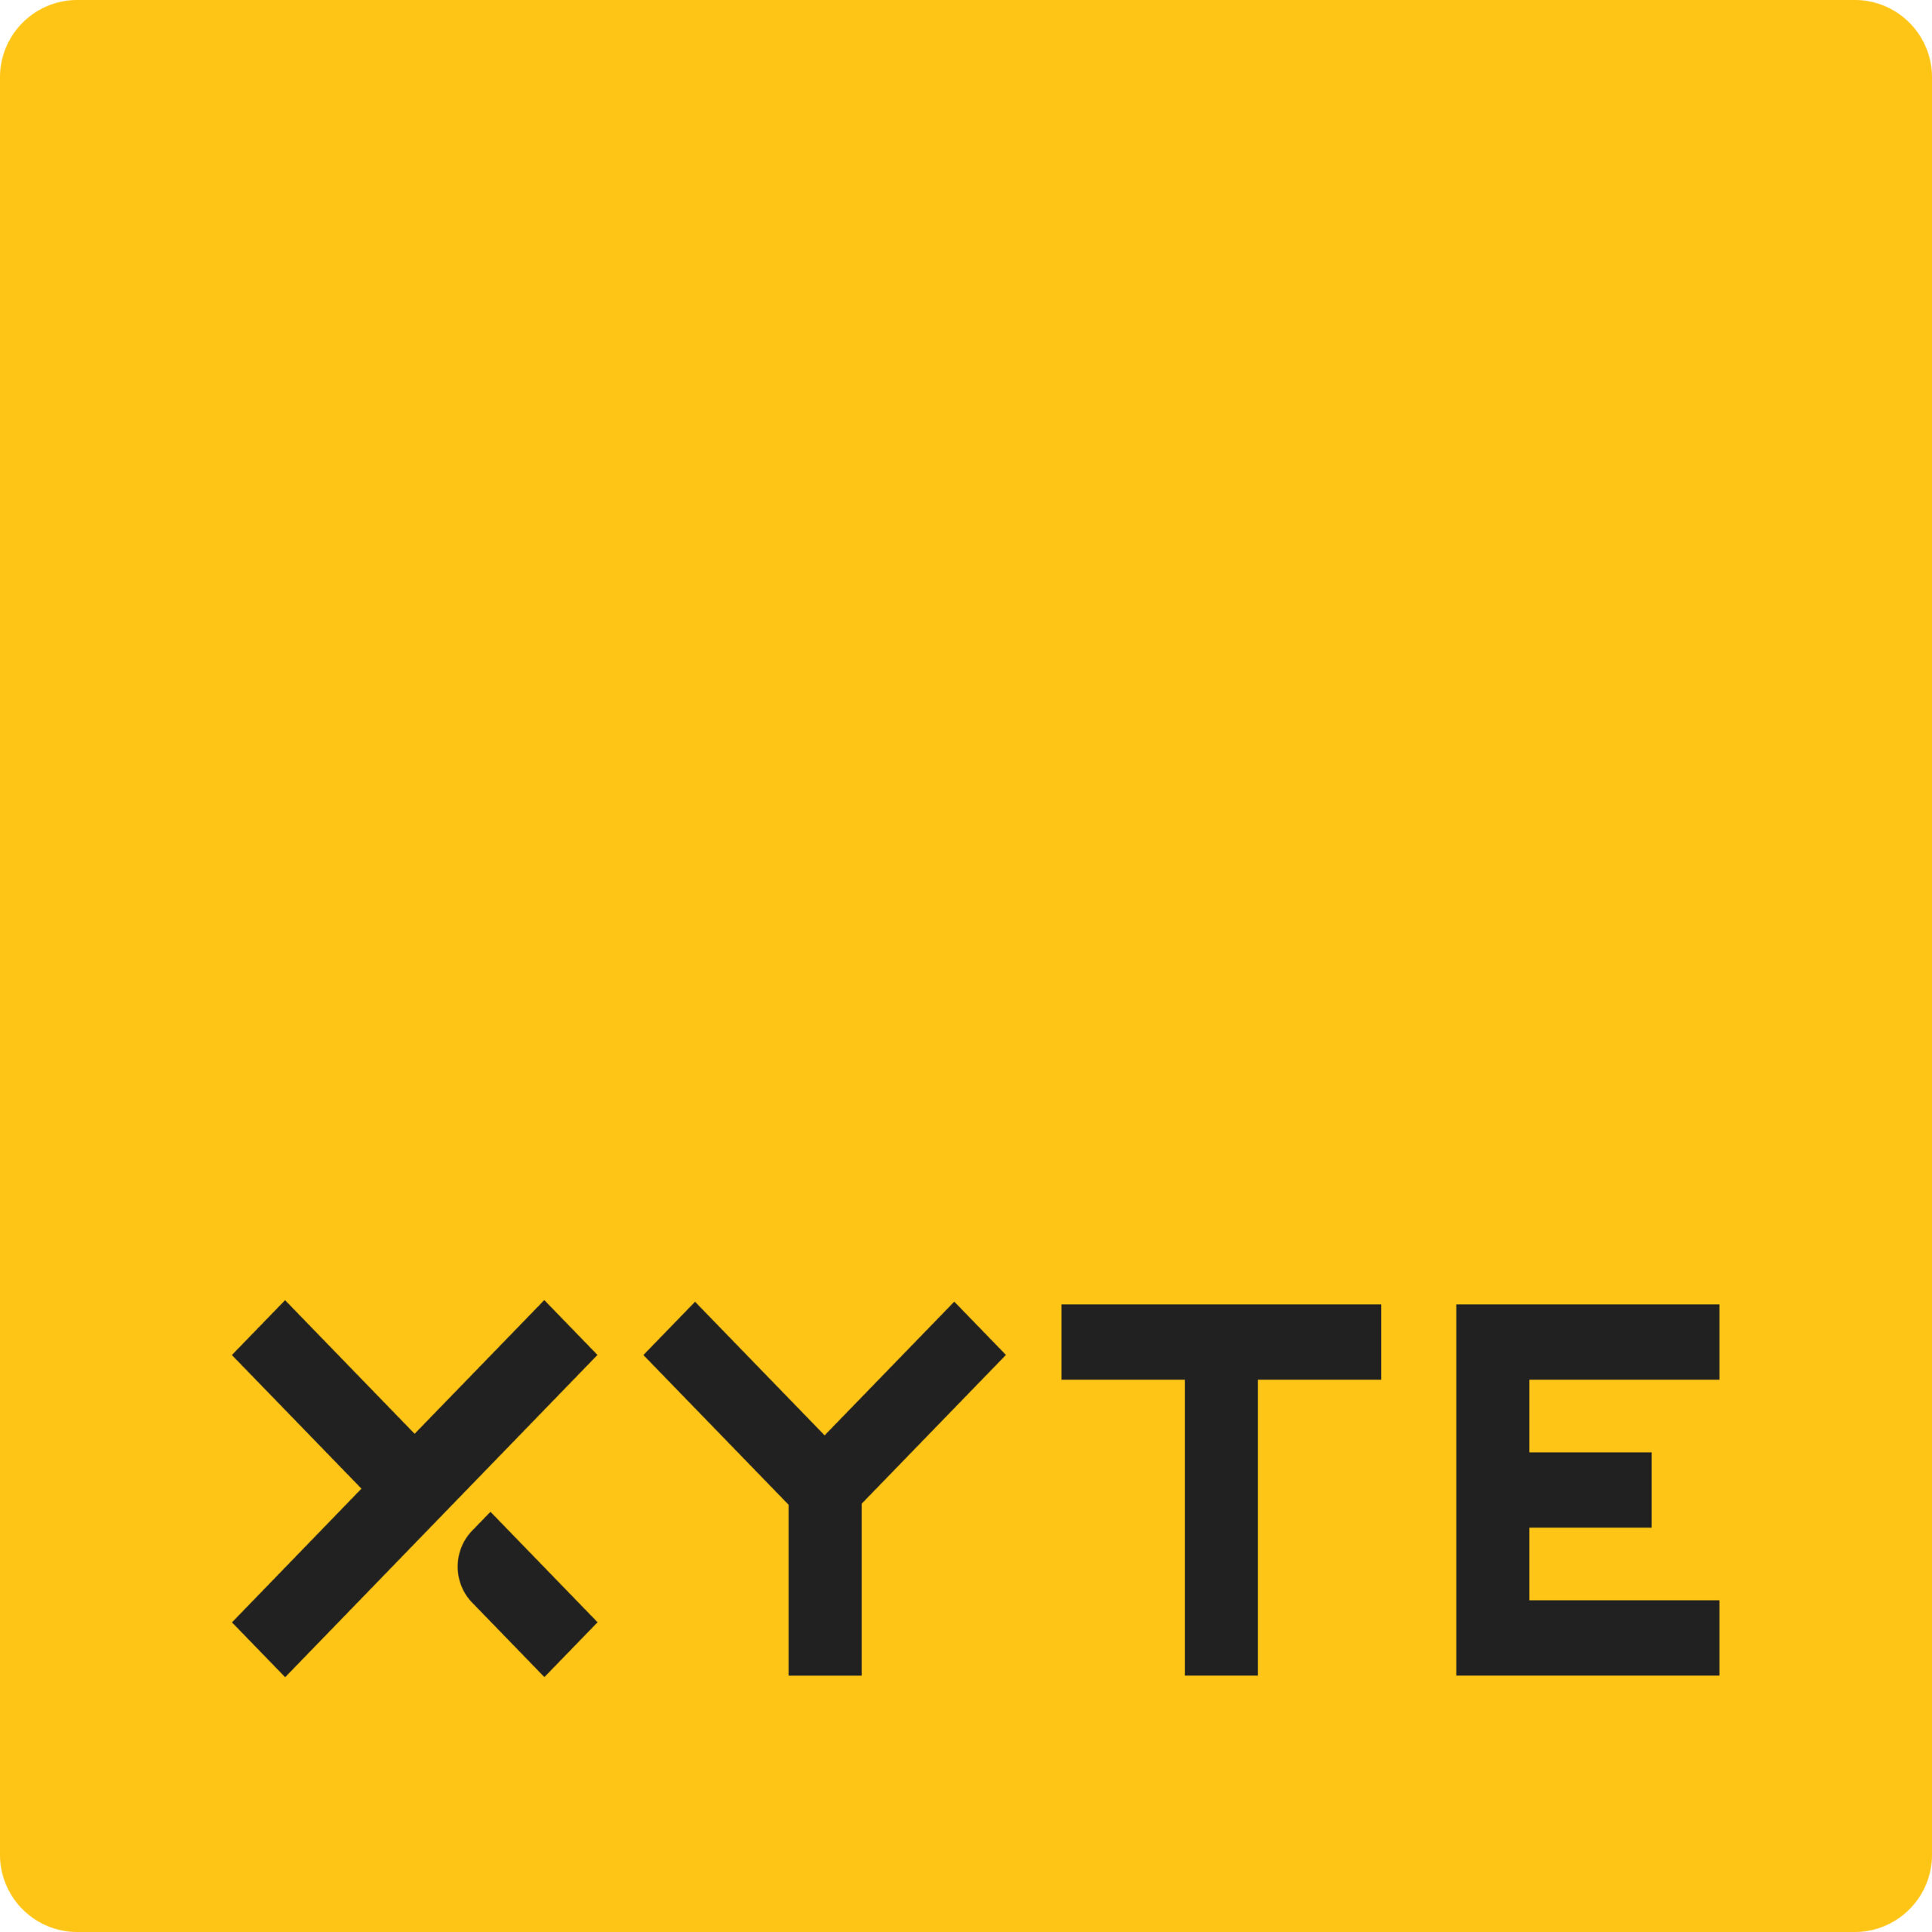 xyte logo down 1